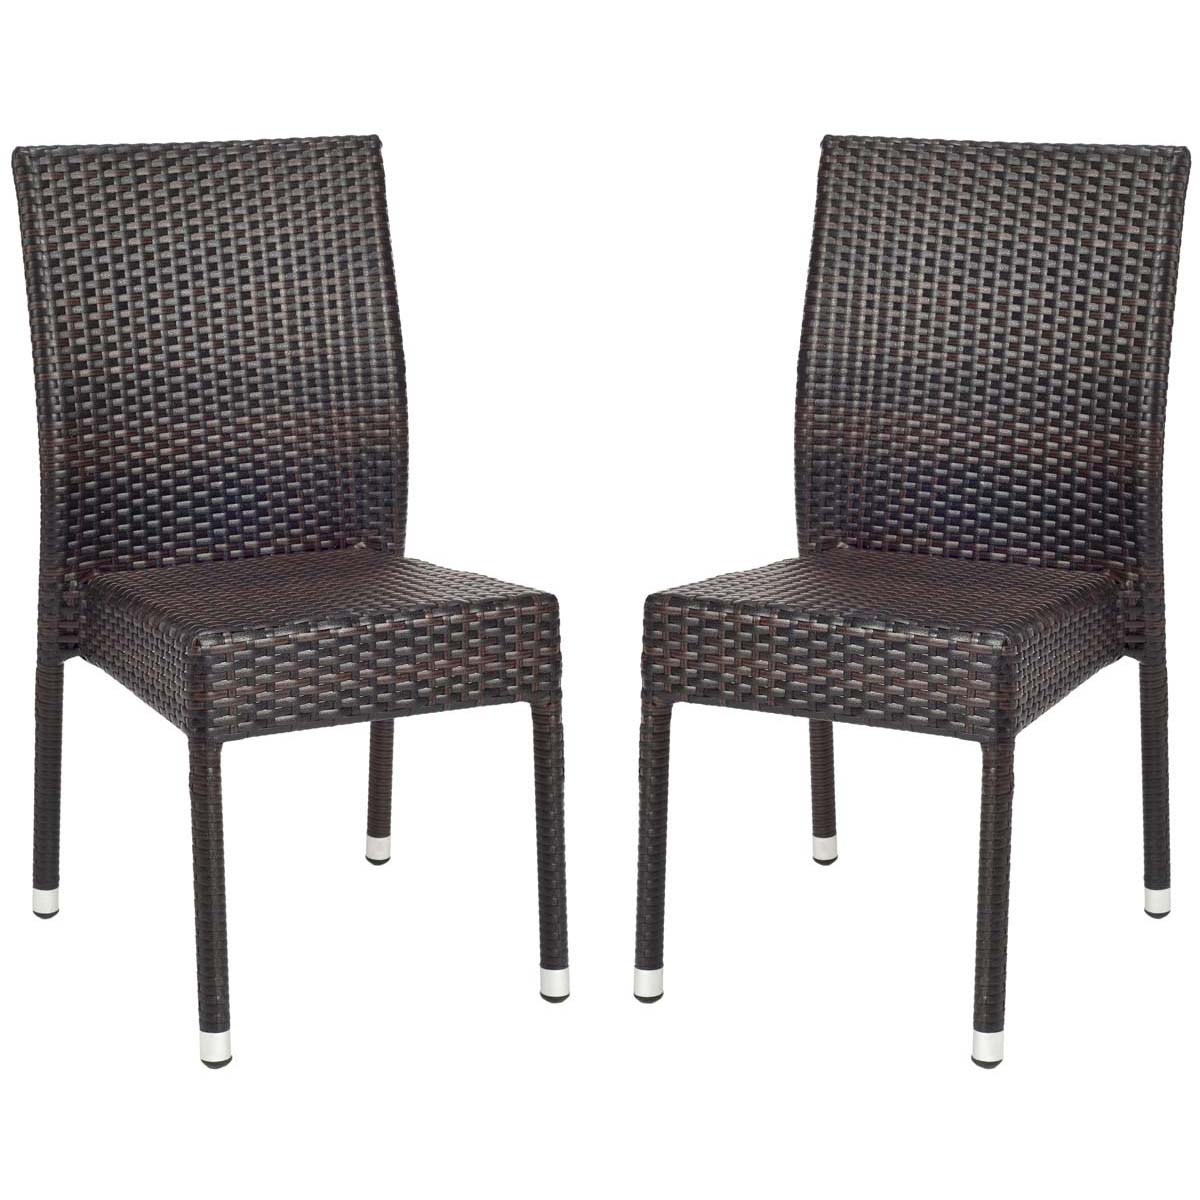 Safavieh Newbury Wicker Chair , PAT1015 - Black/Brown (Set of 2)